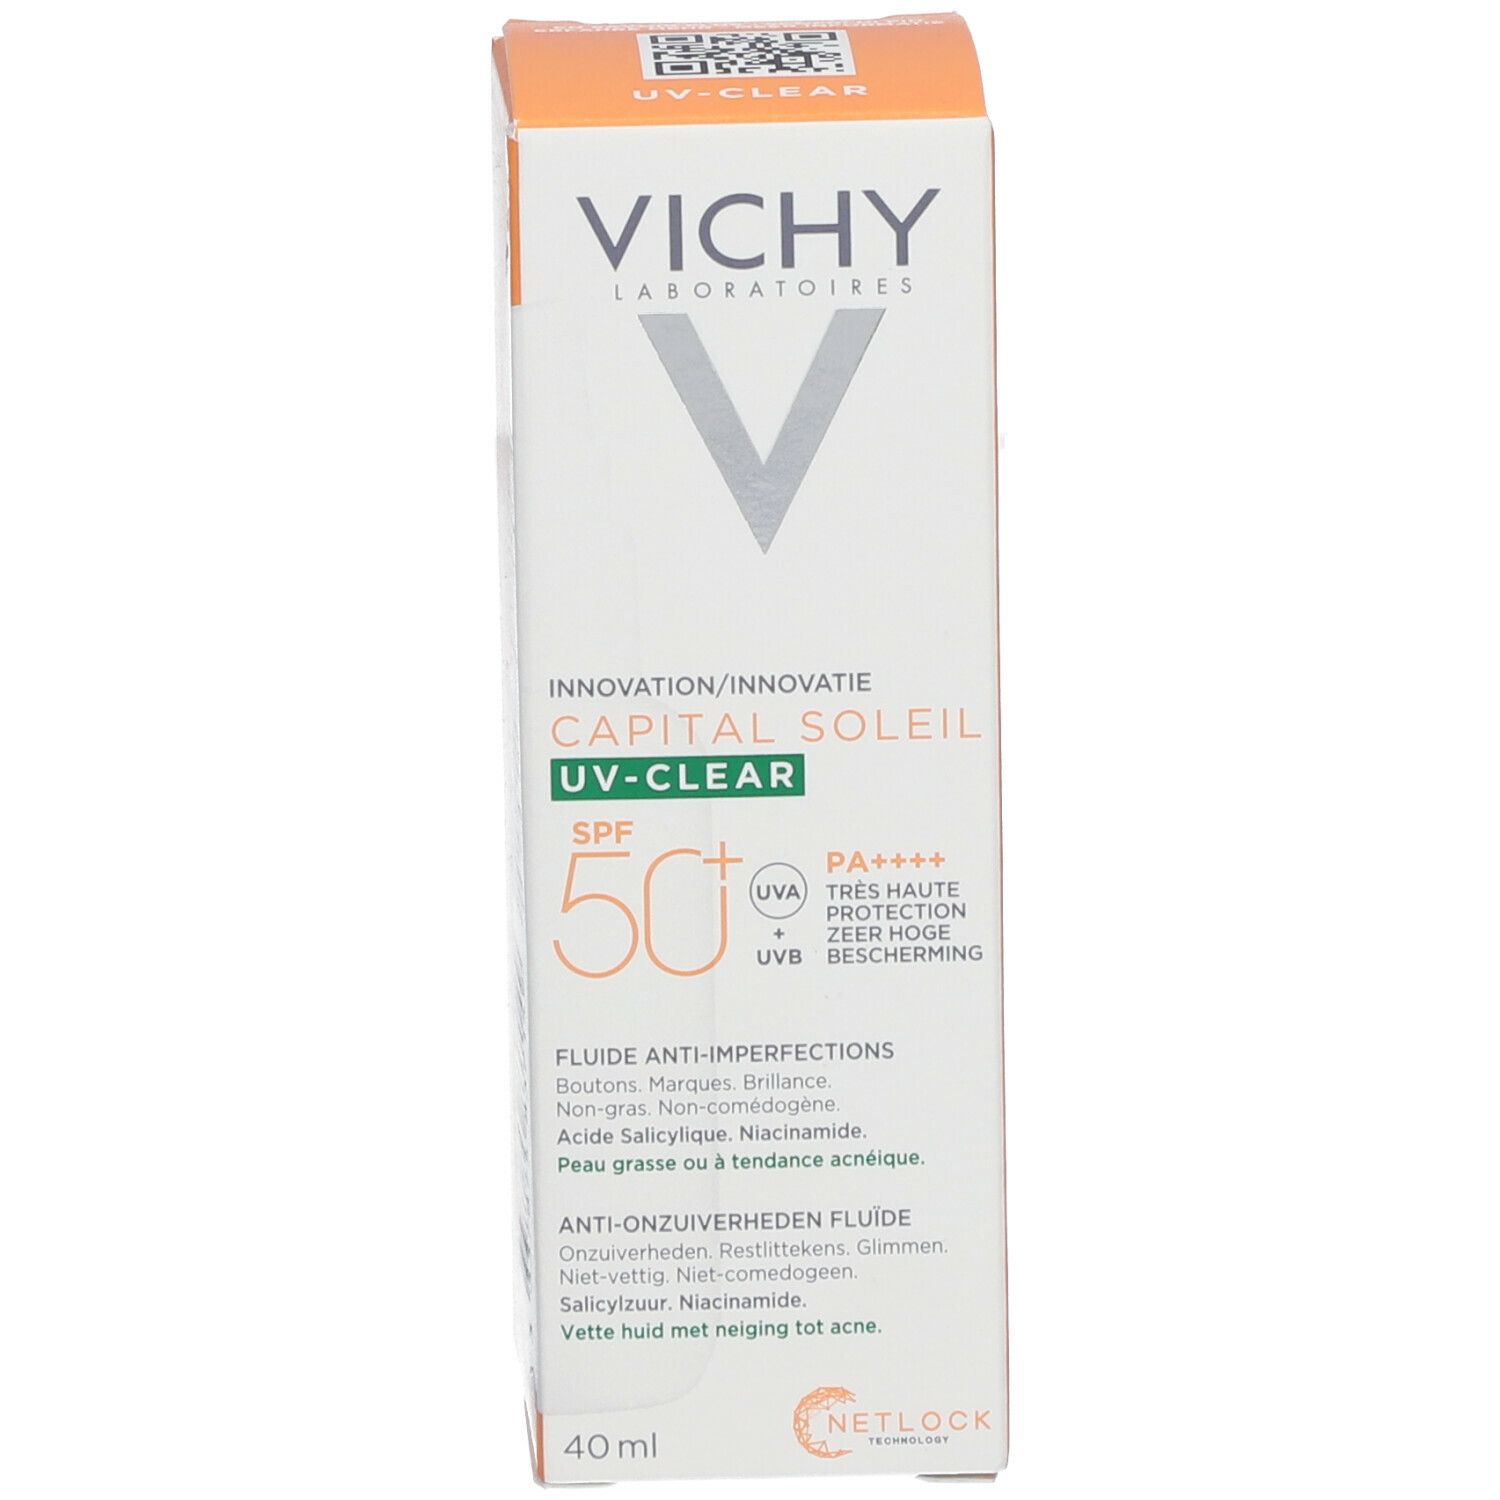 VICHY Capital Soleil UV-CLEAR SPF50+